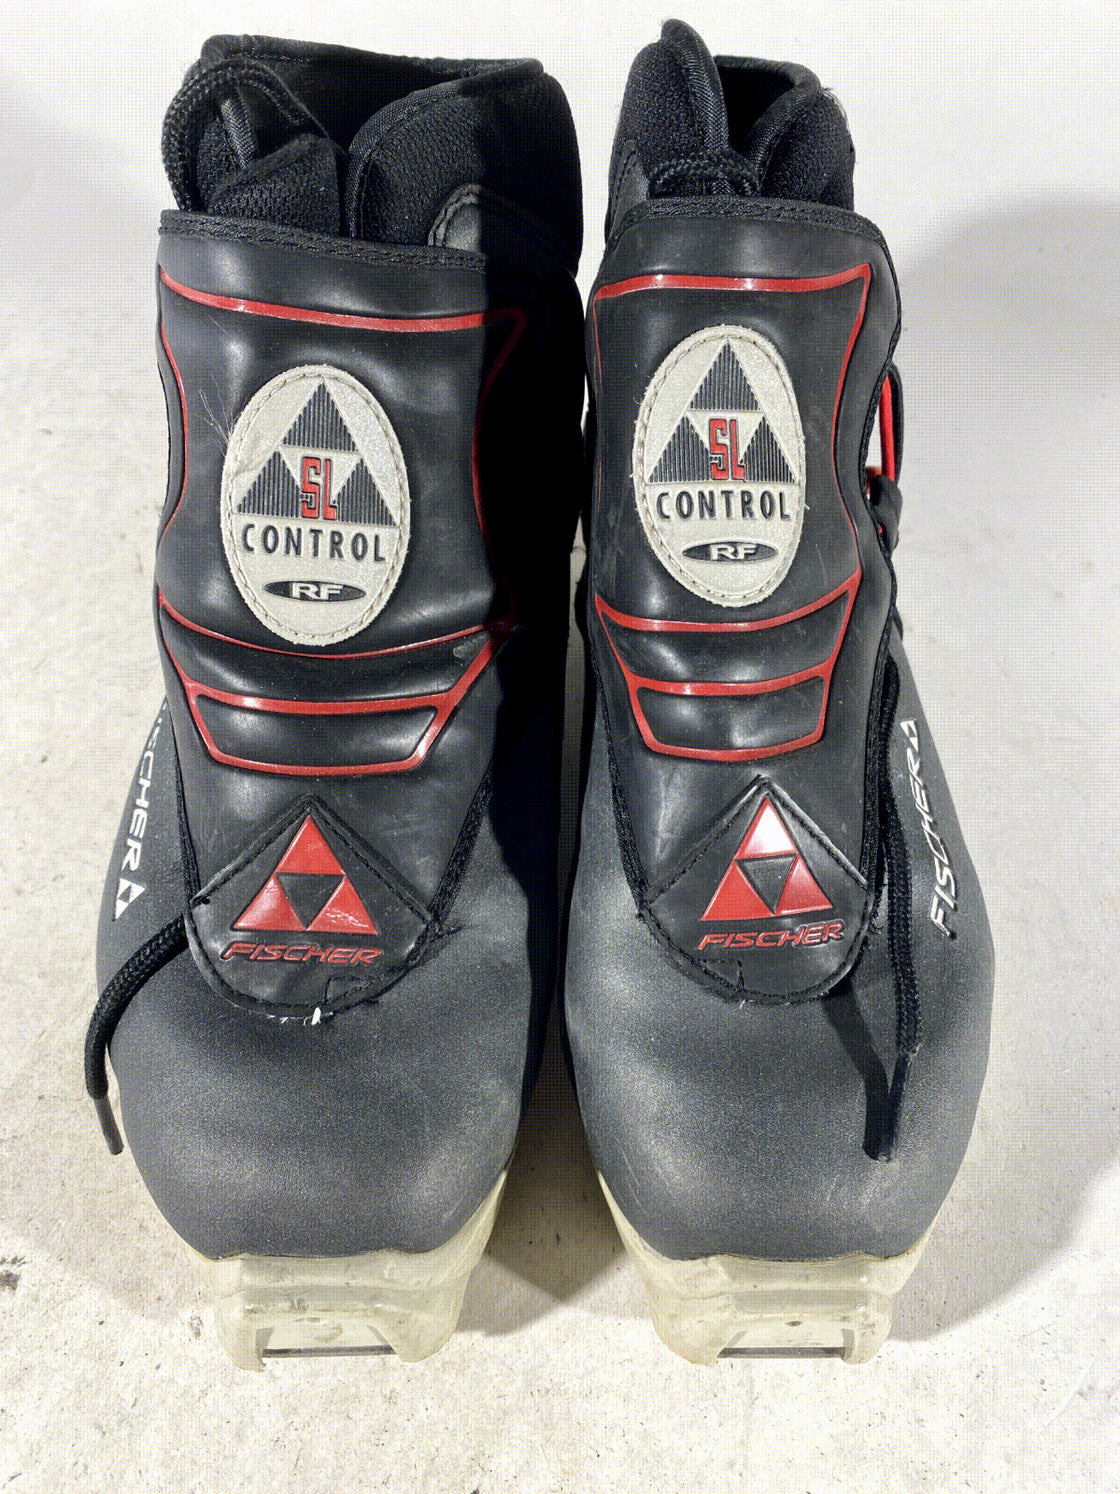 Fischer SL Classic Nordic Cross Country Ski Boots Size EU40 US7.5 SNS Profil